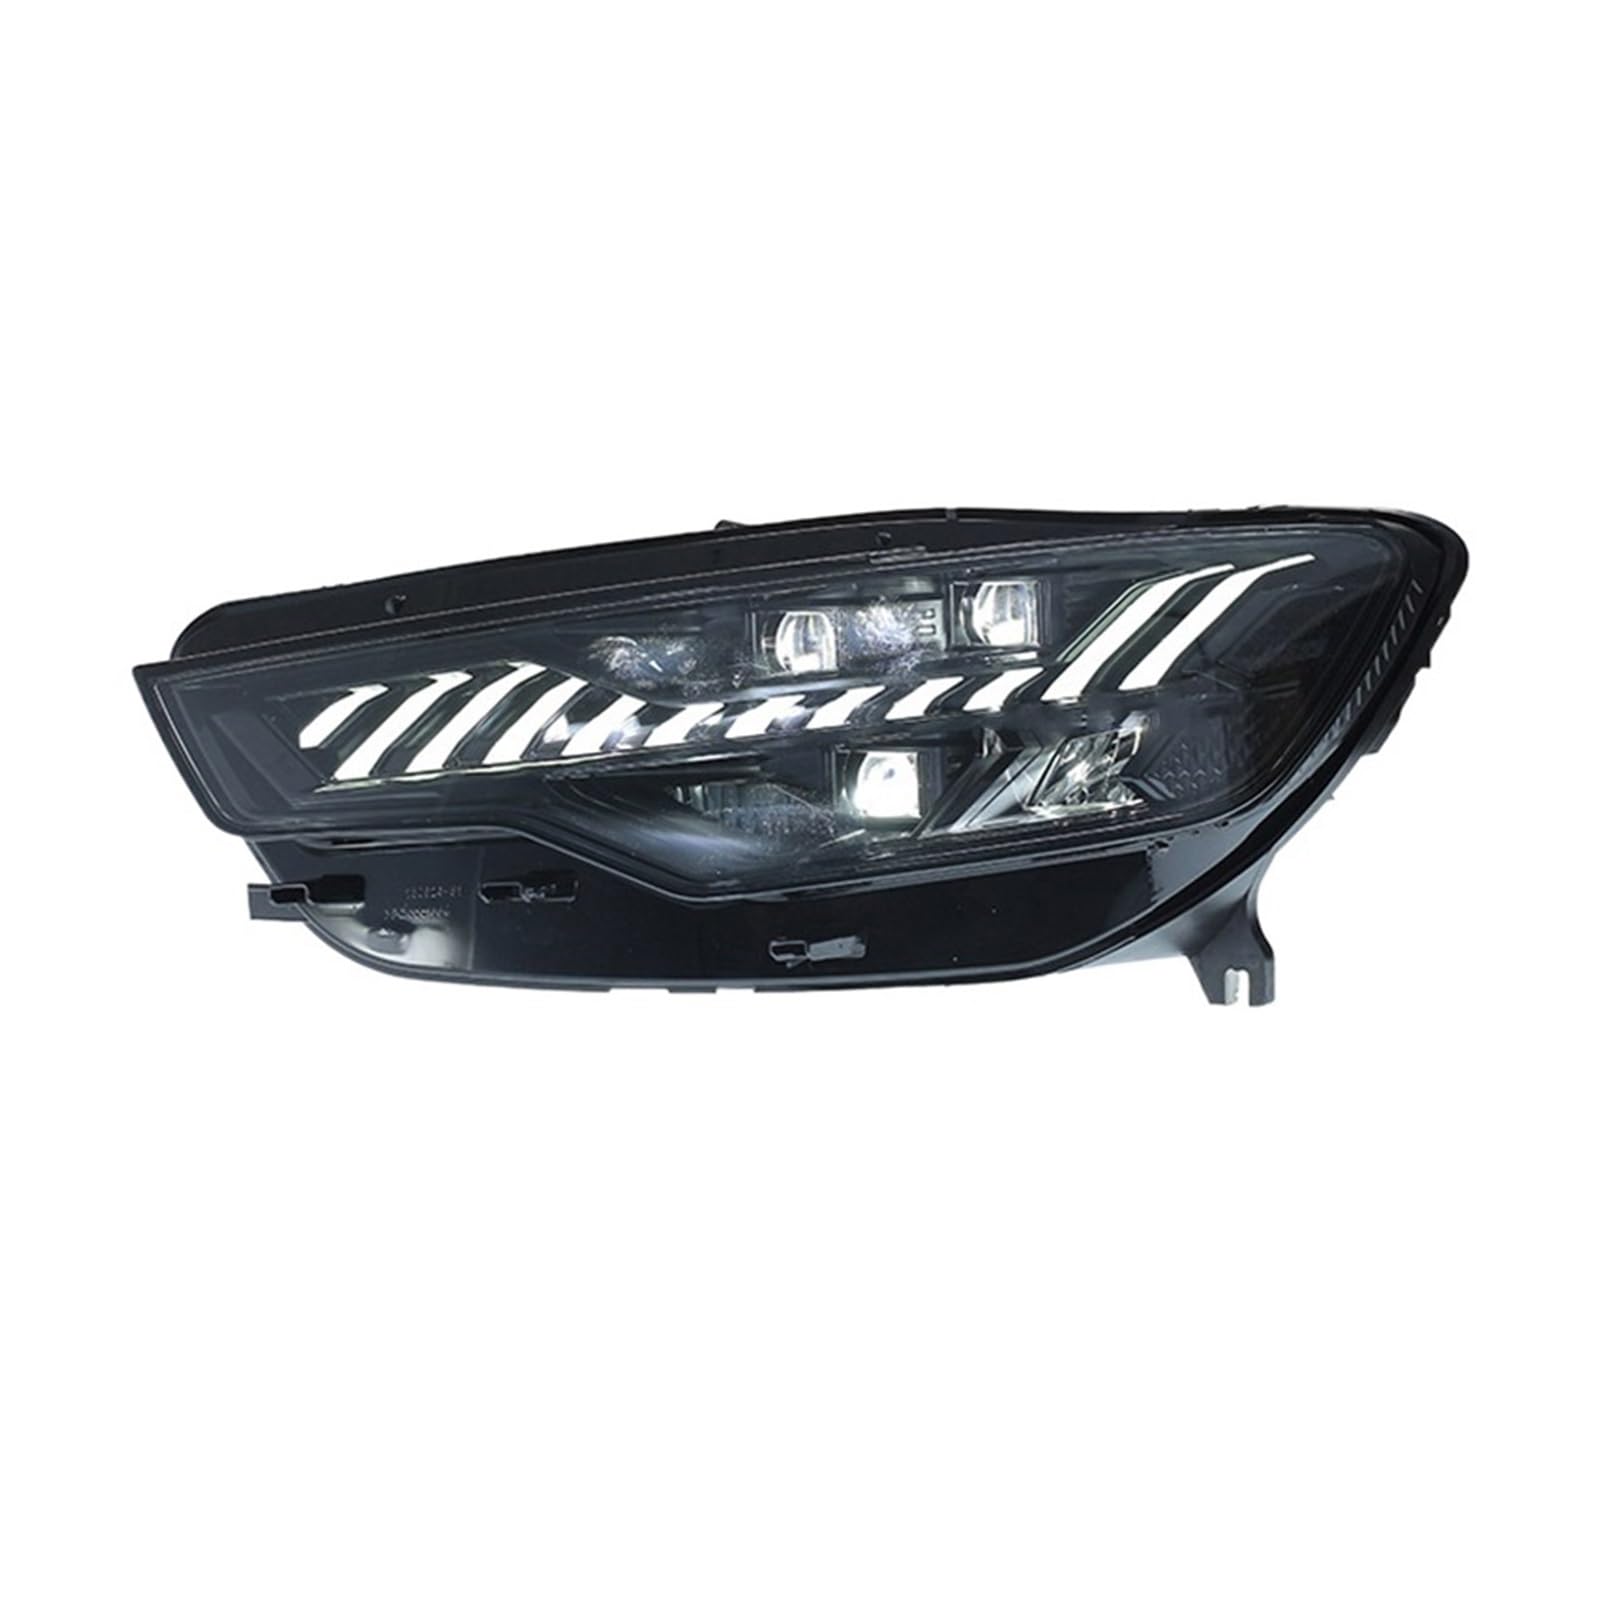 Auto Styling Kompatibel for Audi A6 2012-2015 Scheinwerfer LED DRL Tagfahrlicht LED Dynamische Blinker LED Abblendlicht LED Fernlicht von LIINYTG